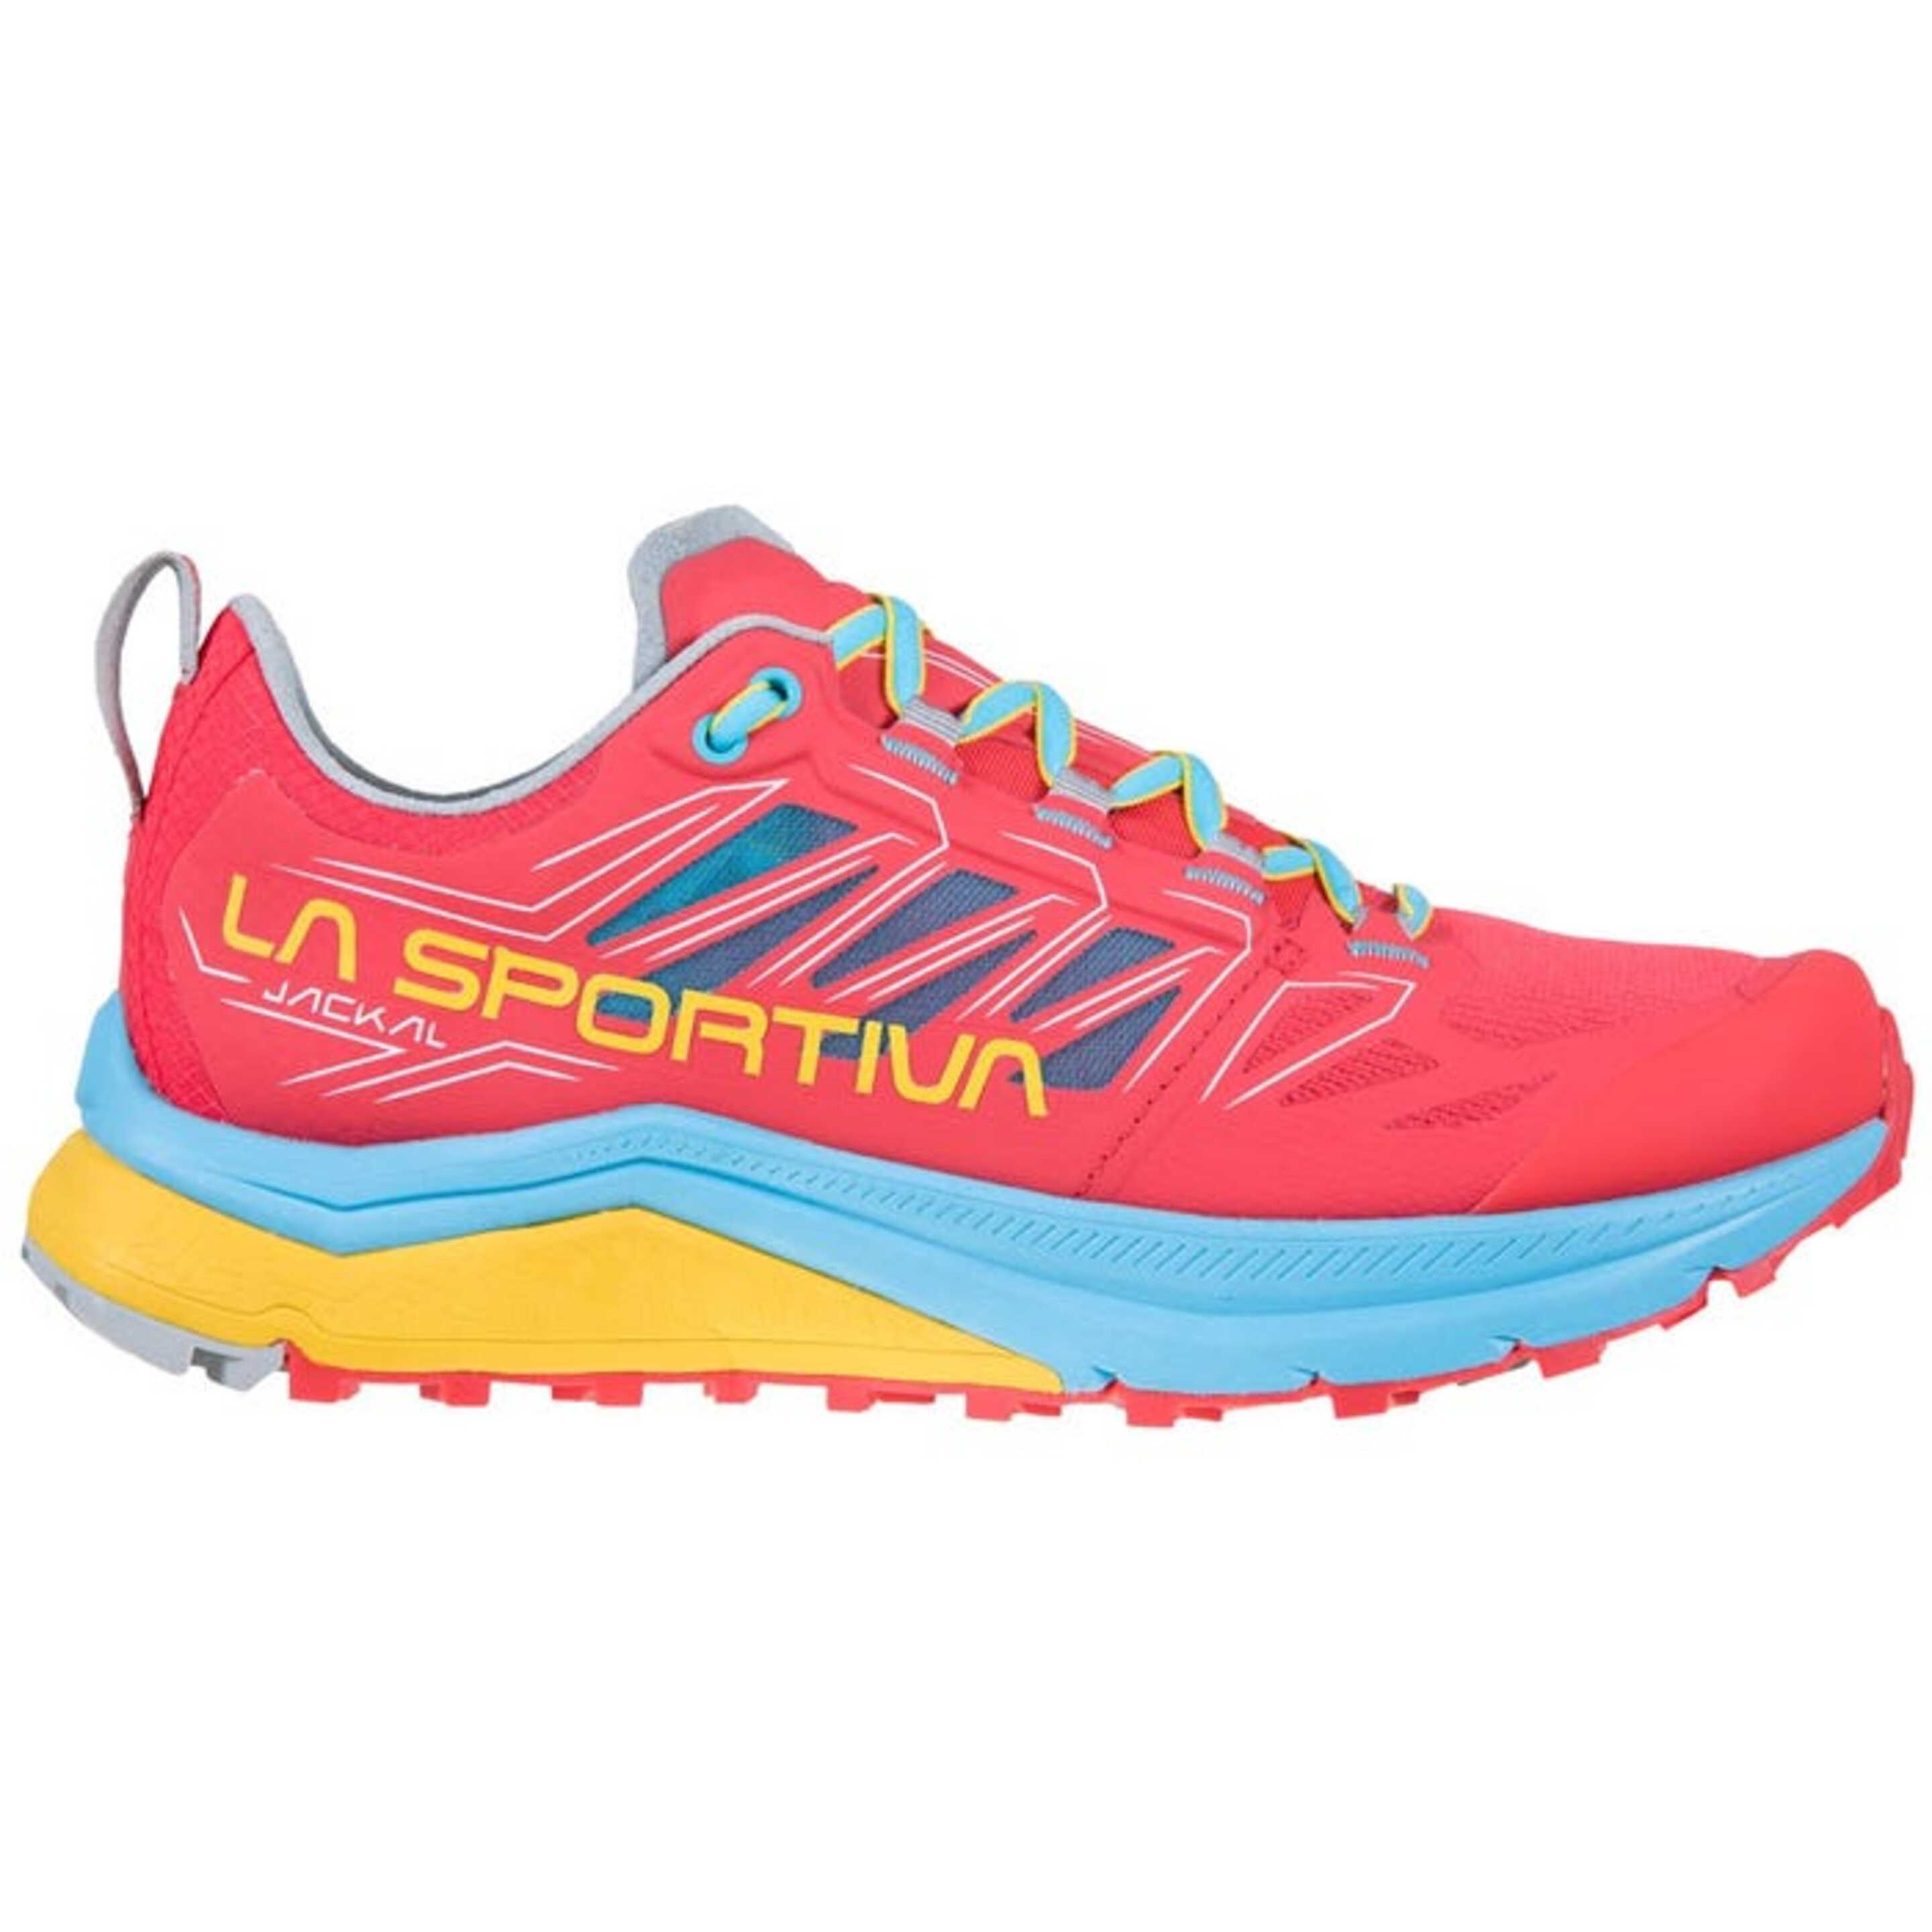 Zapatillas De Trail Running De Mujer Jackal La Sportiva - rosa - 